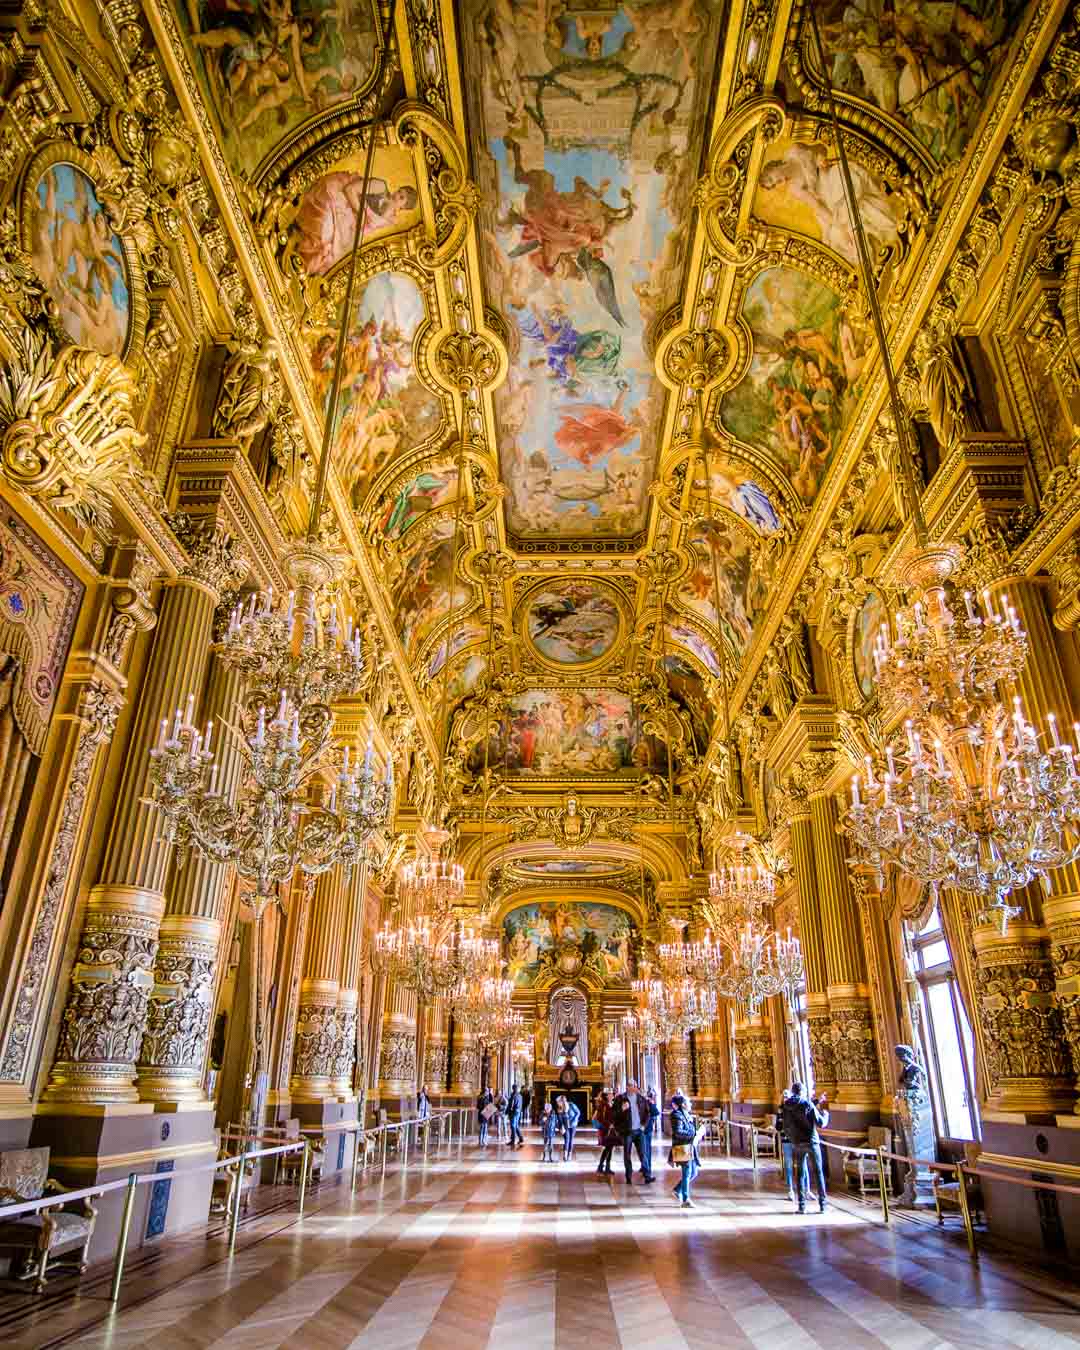 Opera Garnier - 5 Incredible Things to See Inside the Palais Garnier!